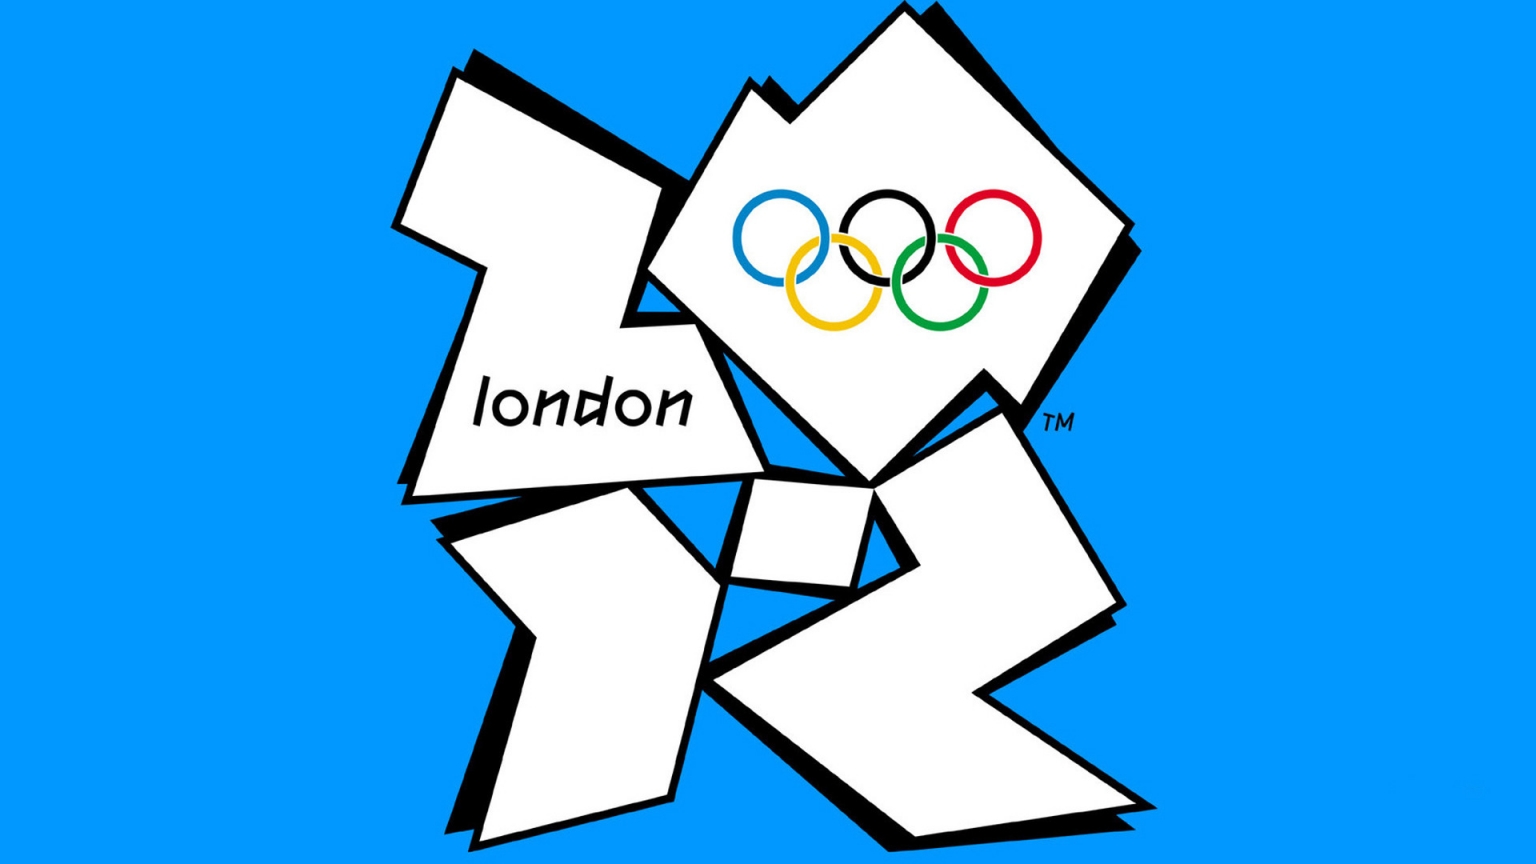 London 2012 Olympics Logo for 1536 x 864 HDTV resolution